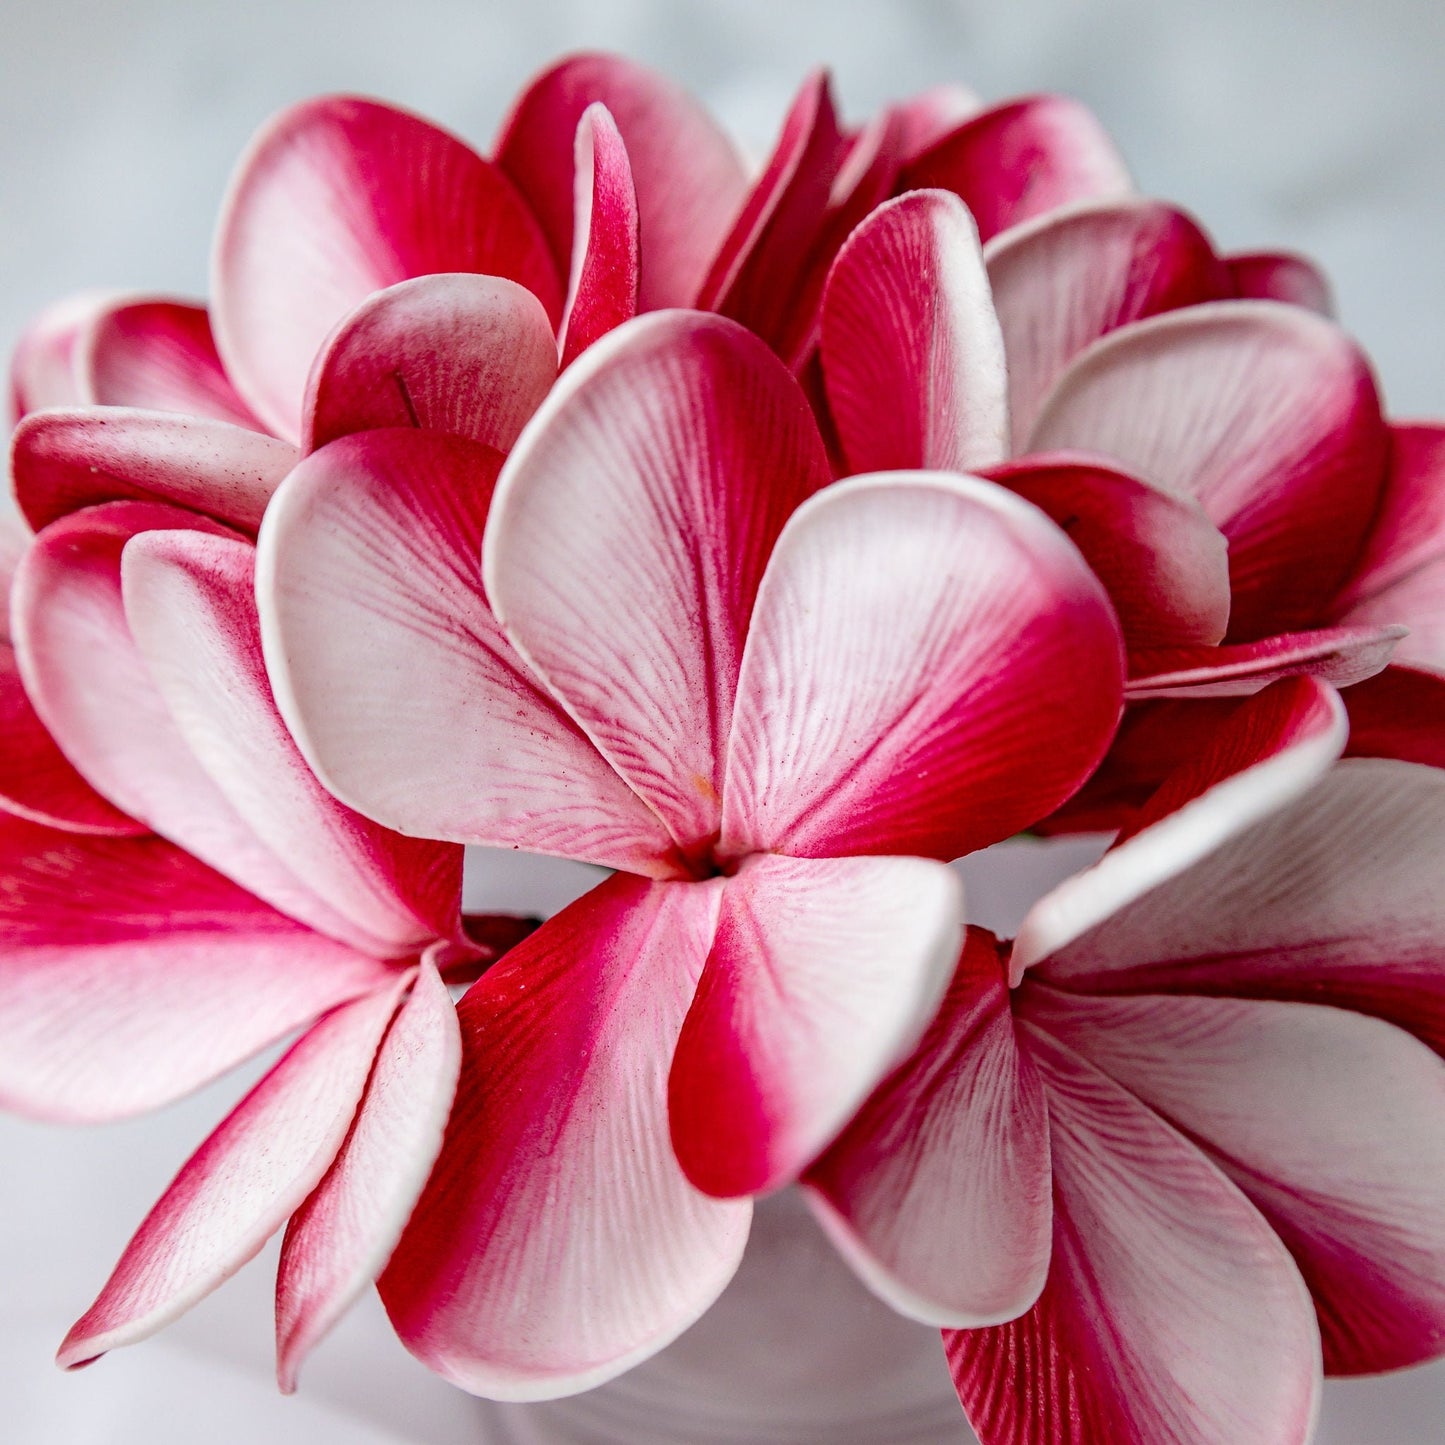 Candy Stripe Frangipani Flowerhead - Realistic Artificial Flowers